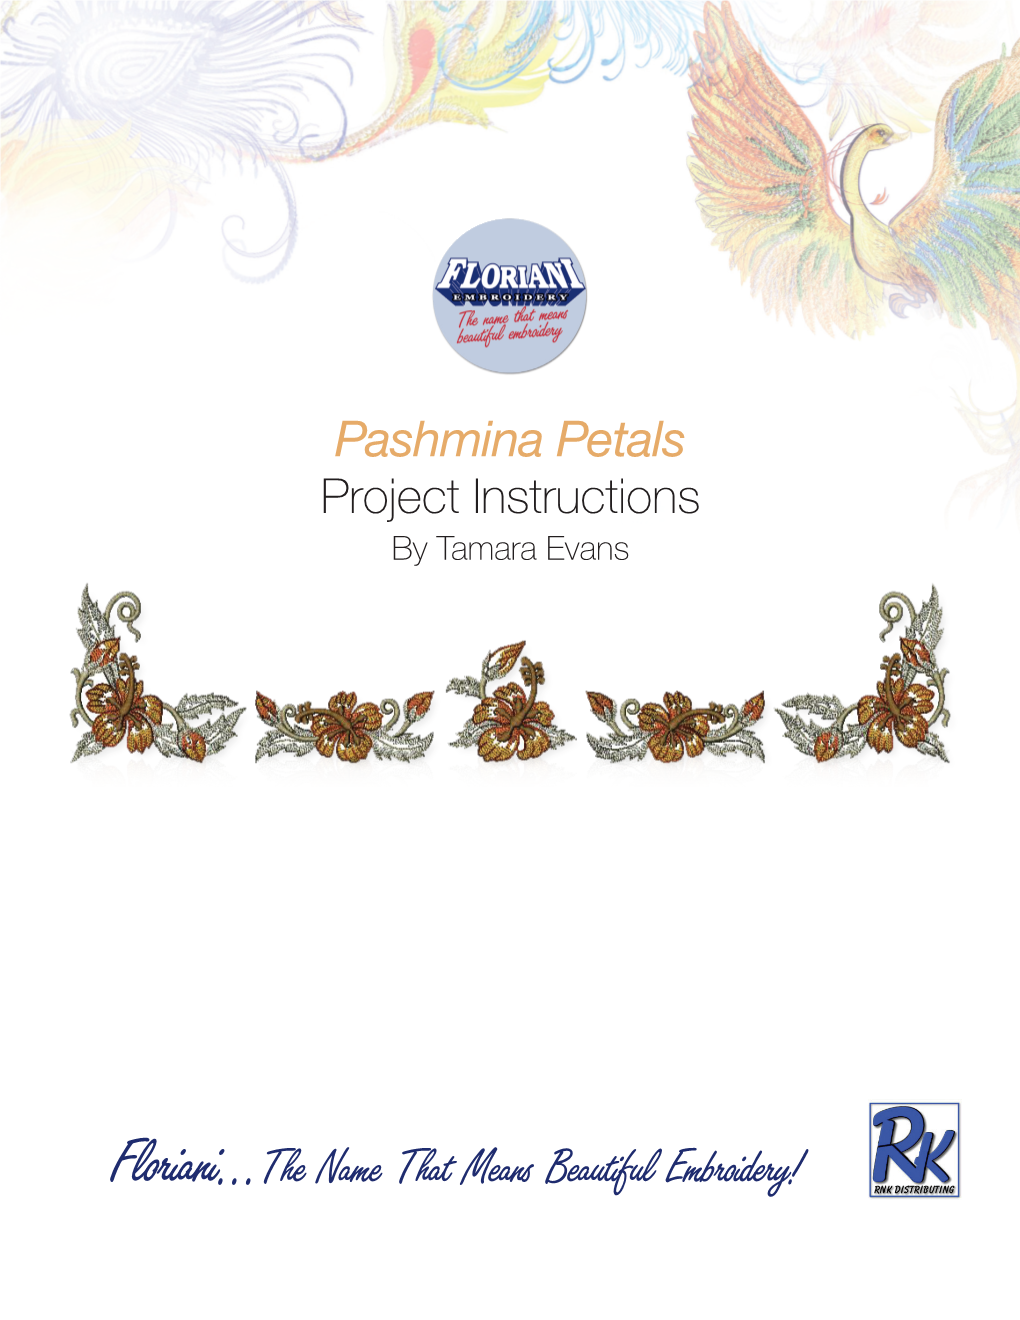 Pashmina Petals Project Instructions by Tamara Evans